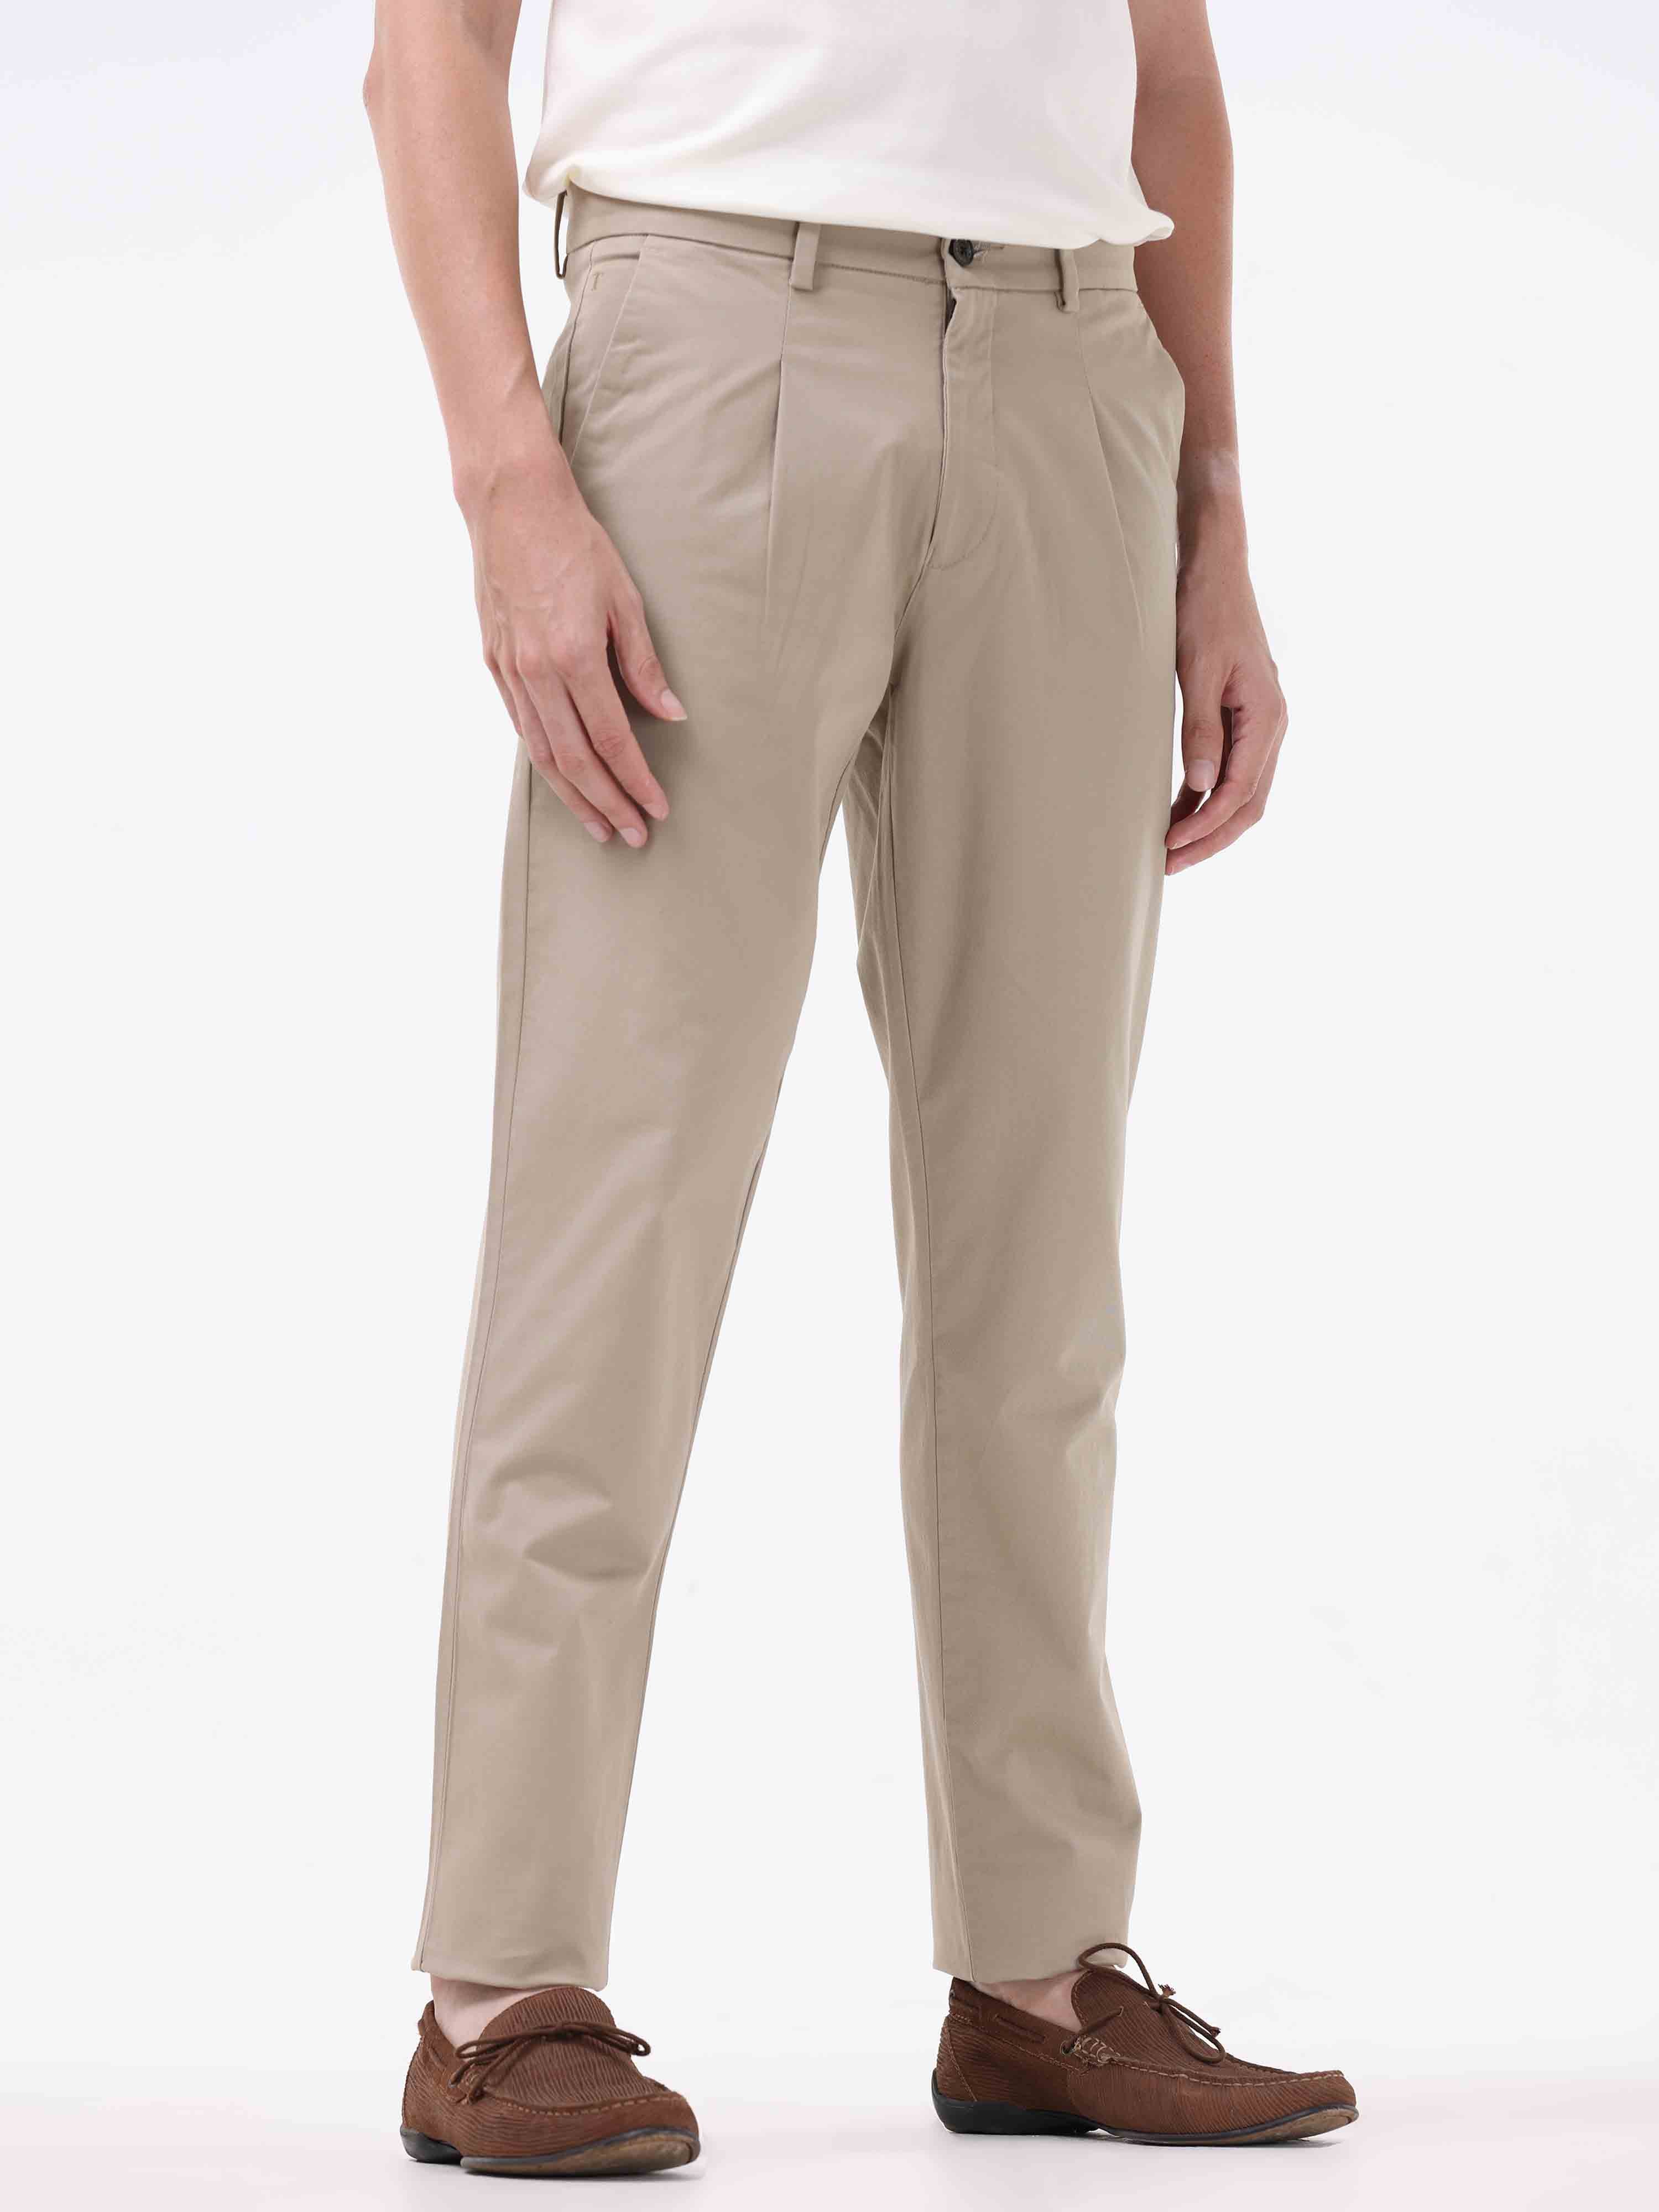 Twill Pants [PA232-TWILL-KHAKI] - FlynnO'Hara Uniforms